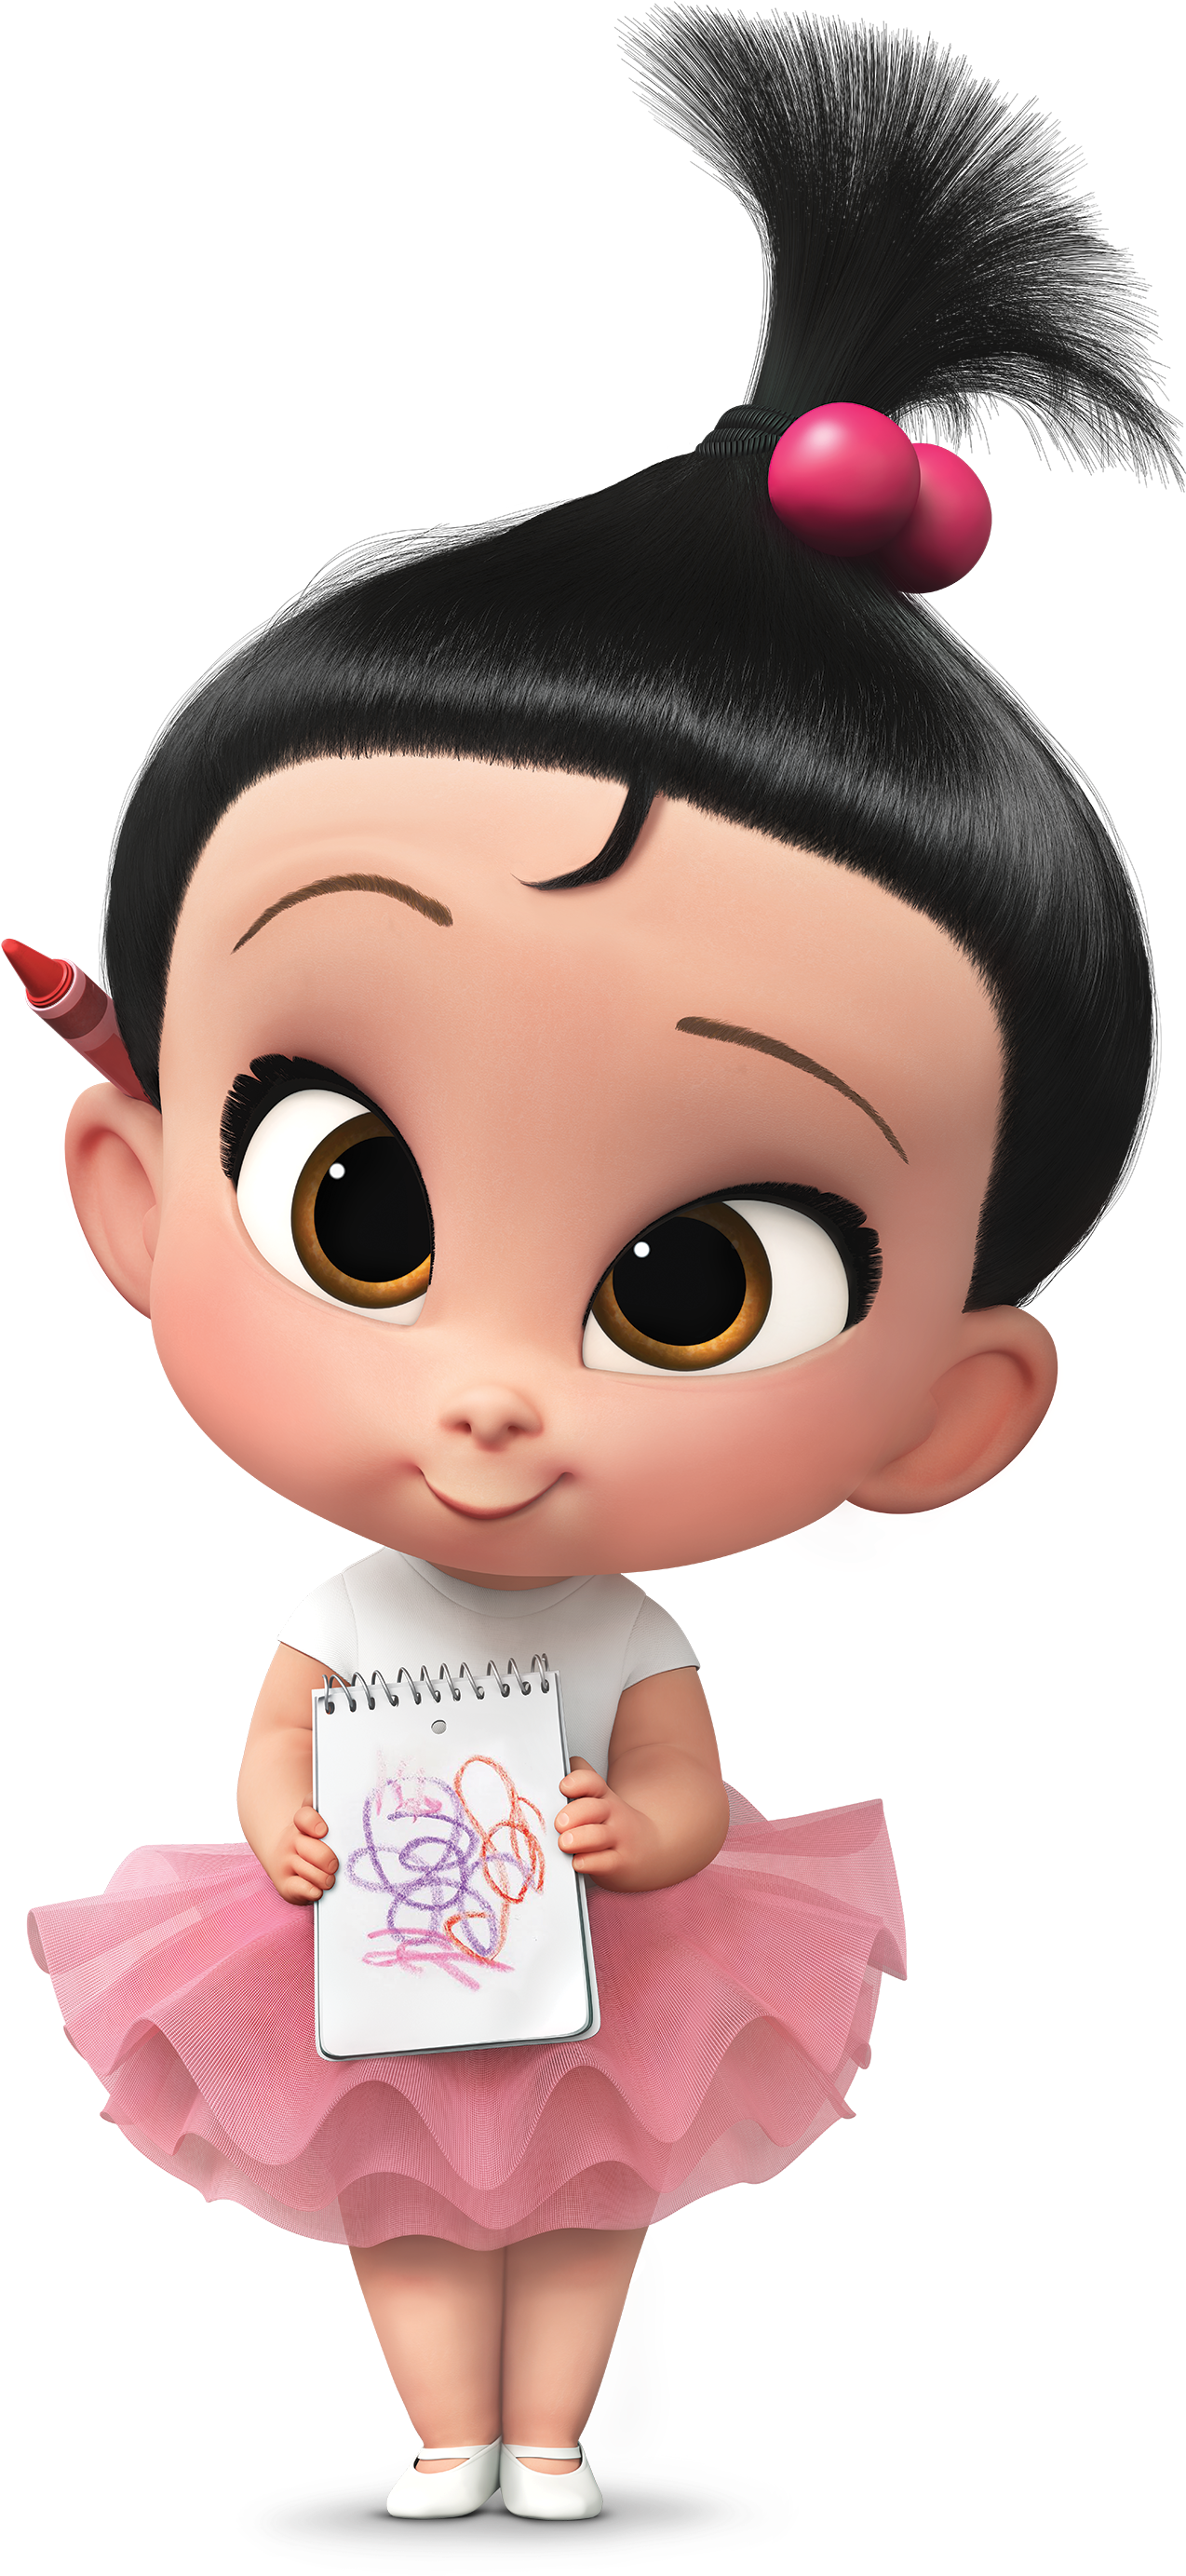 A Cartoon Of A Baby Holding A Notebook